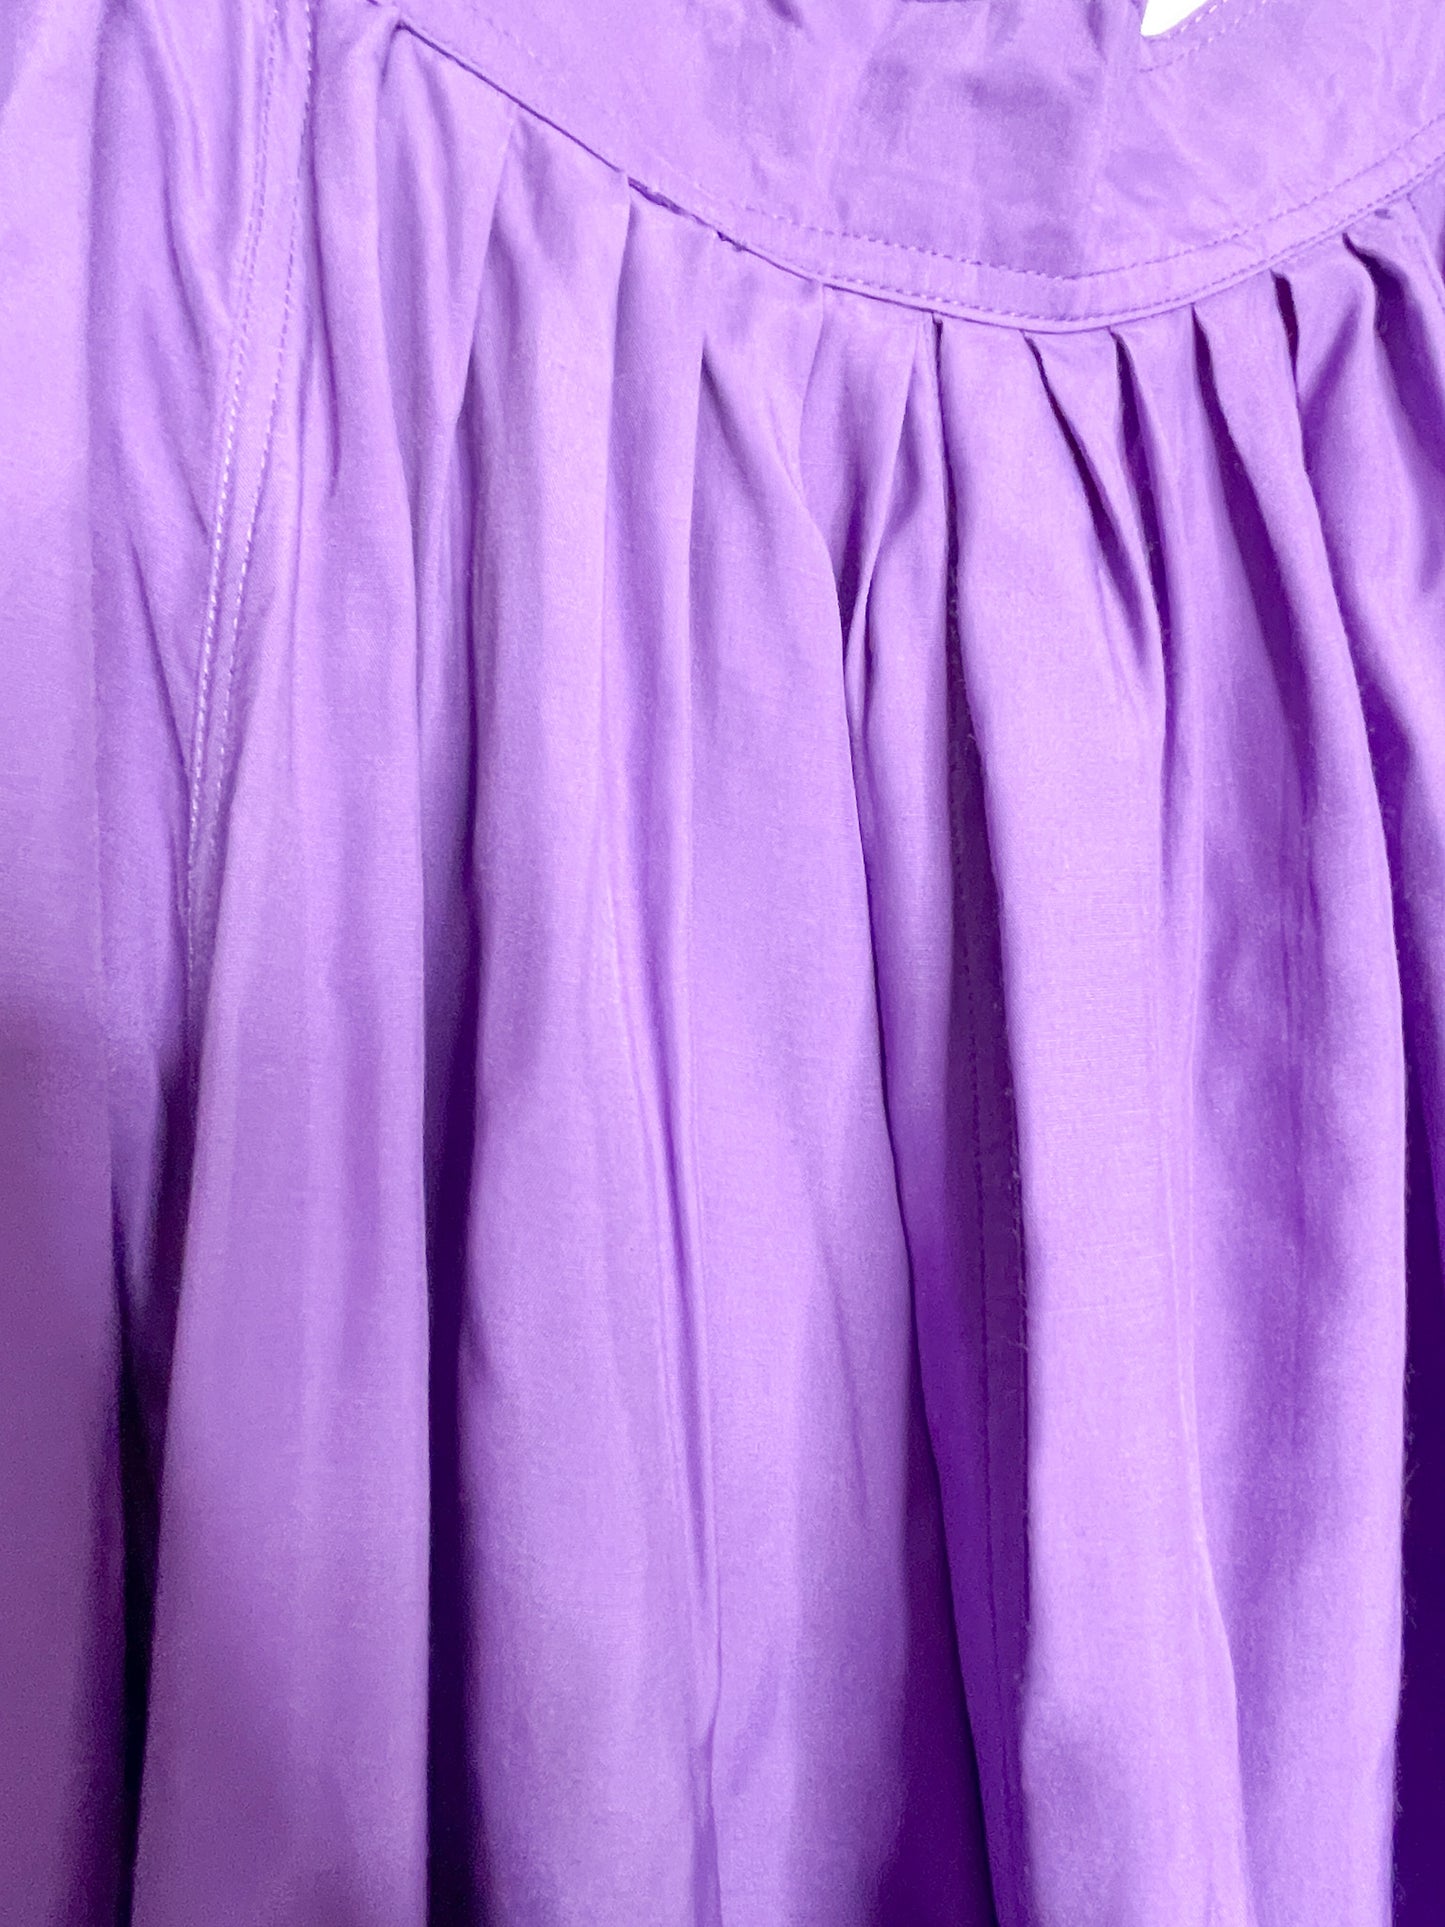 Vintage Tanjay Purple Skirt | Vintage Button Front Skirt | Plus size vintage skirt with pockets.